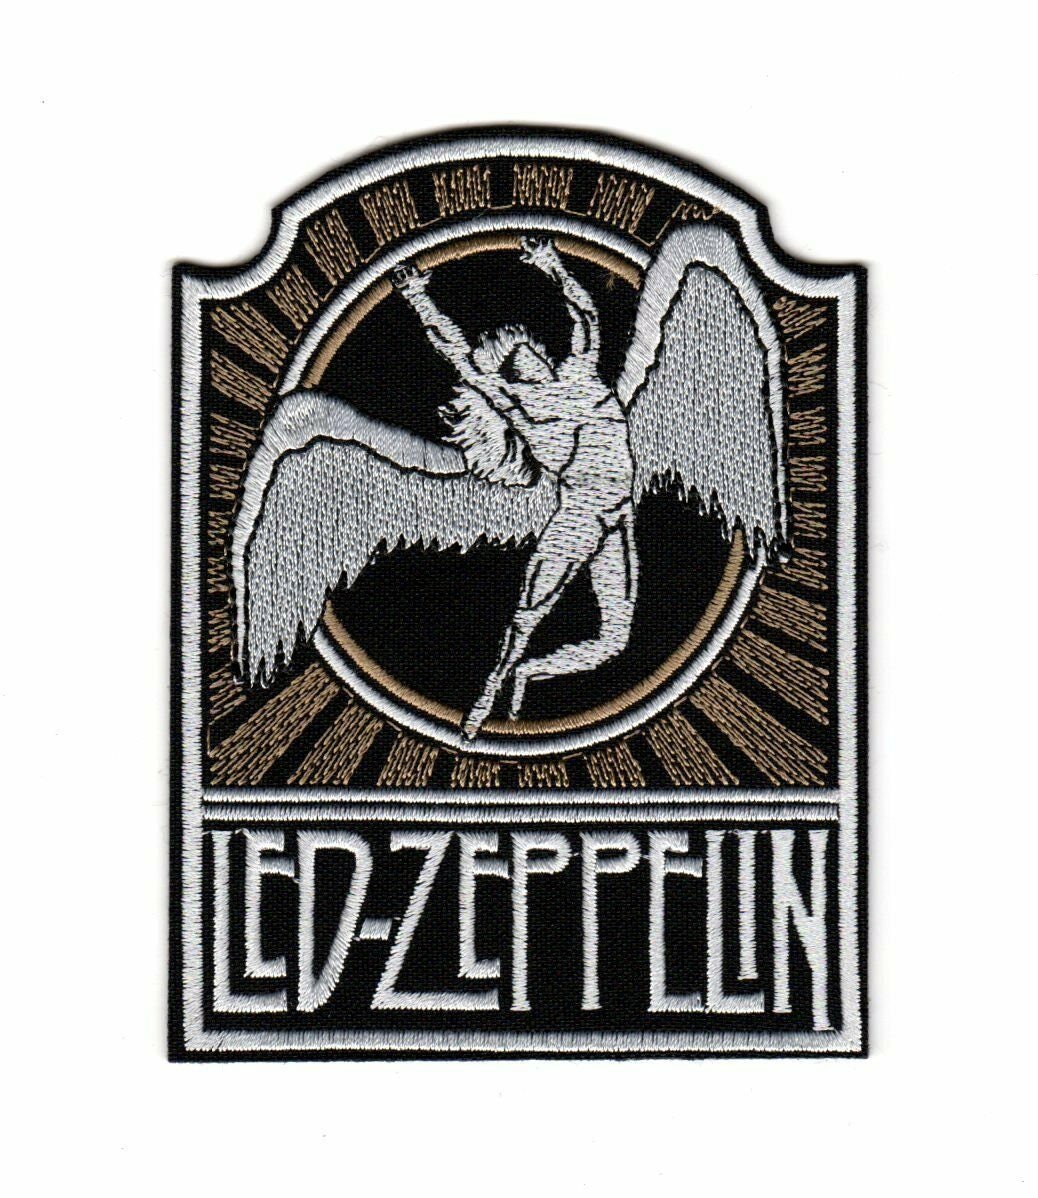 LED Zeppelin Pin Button - The Rock Legends